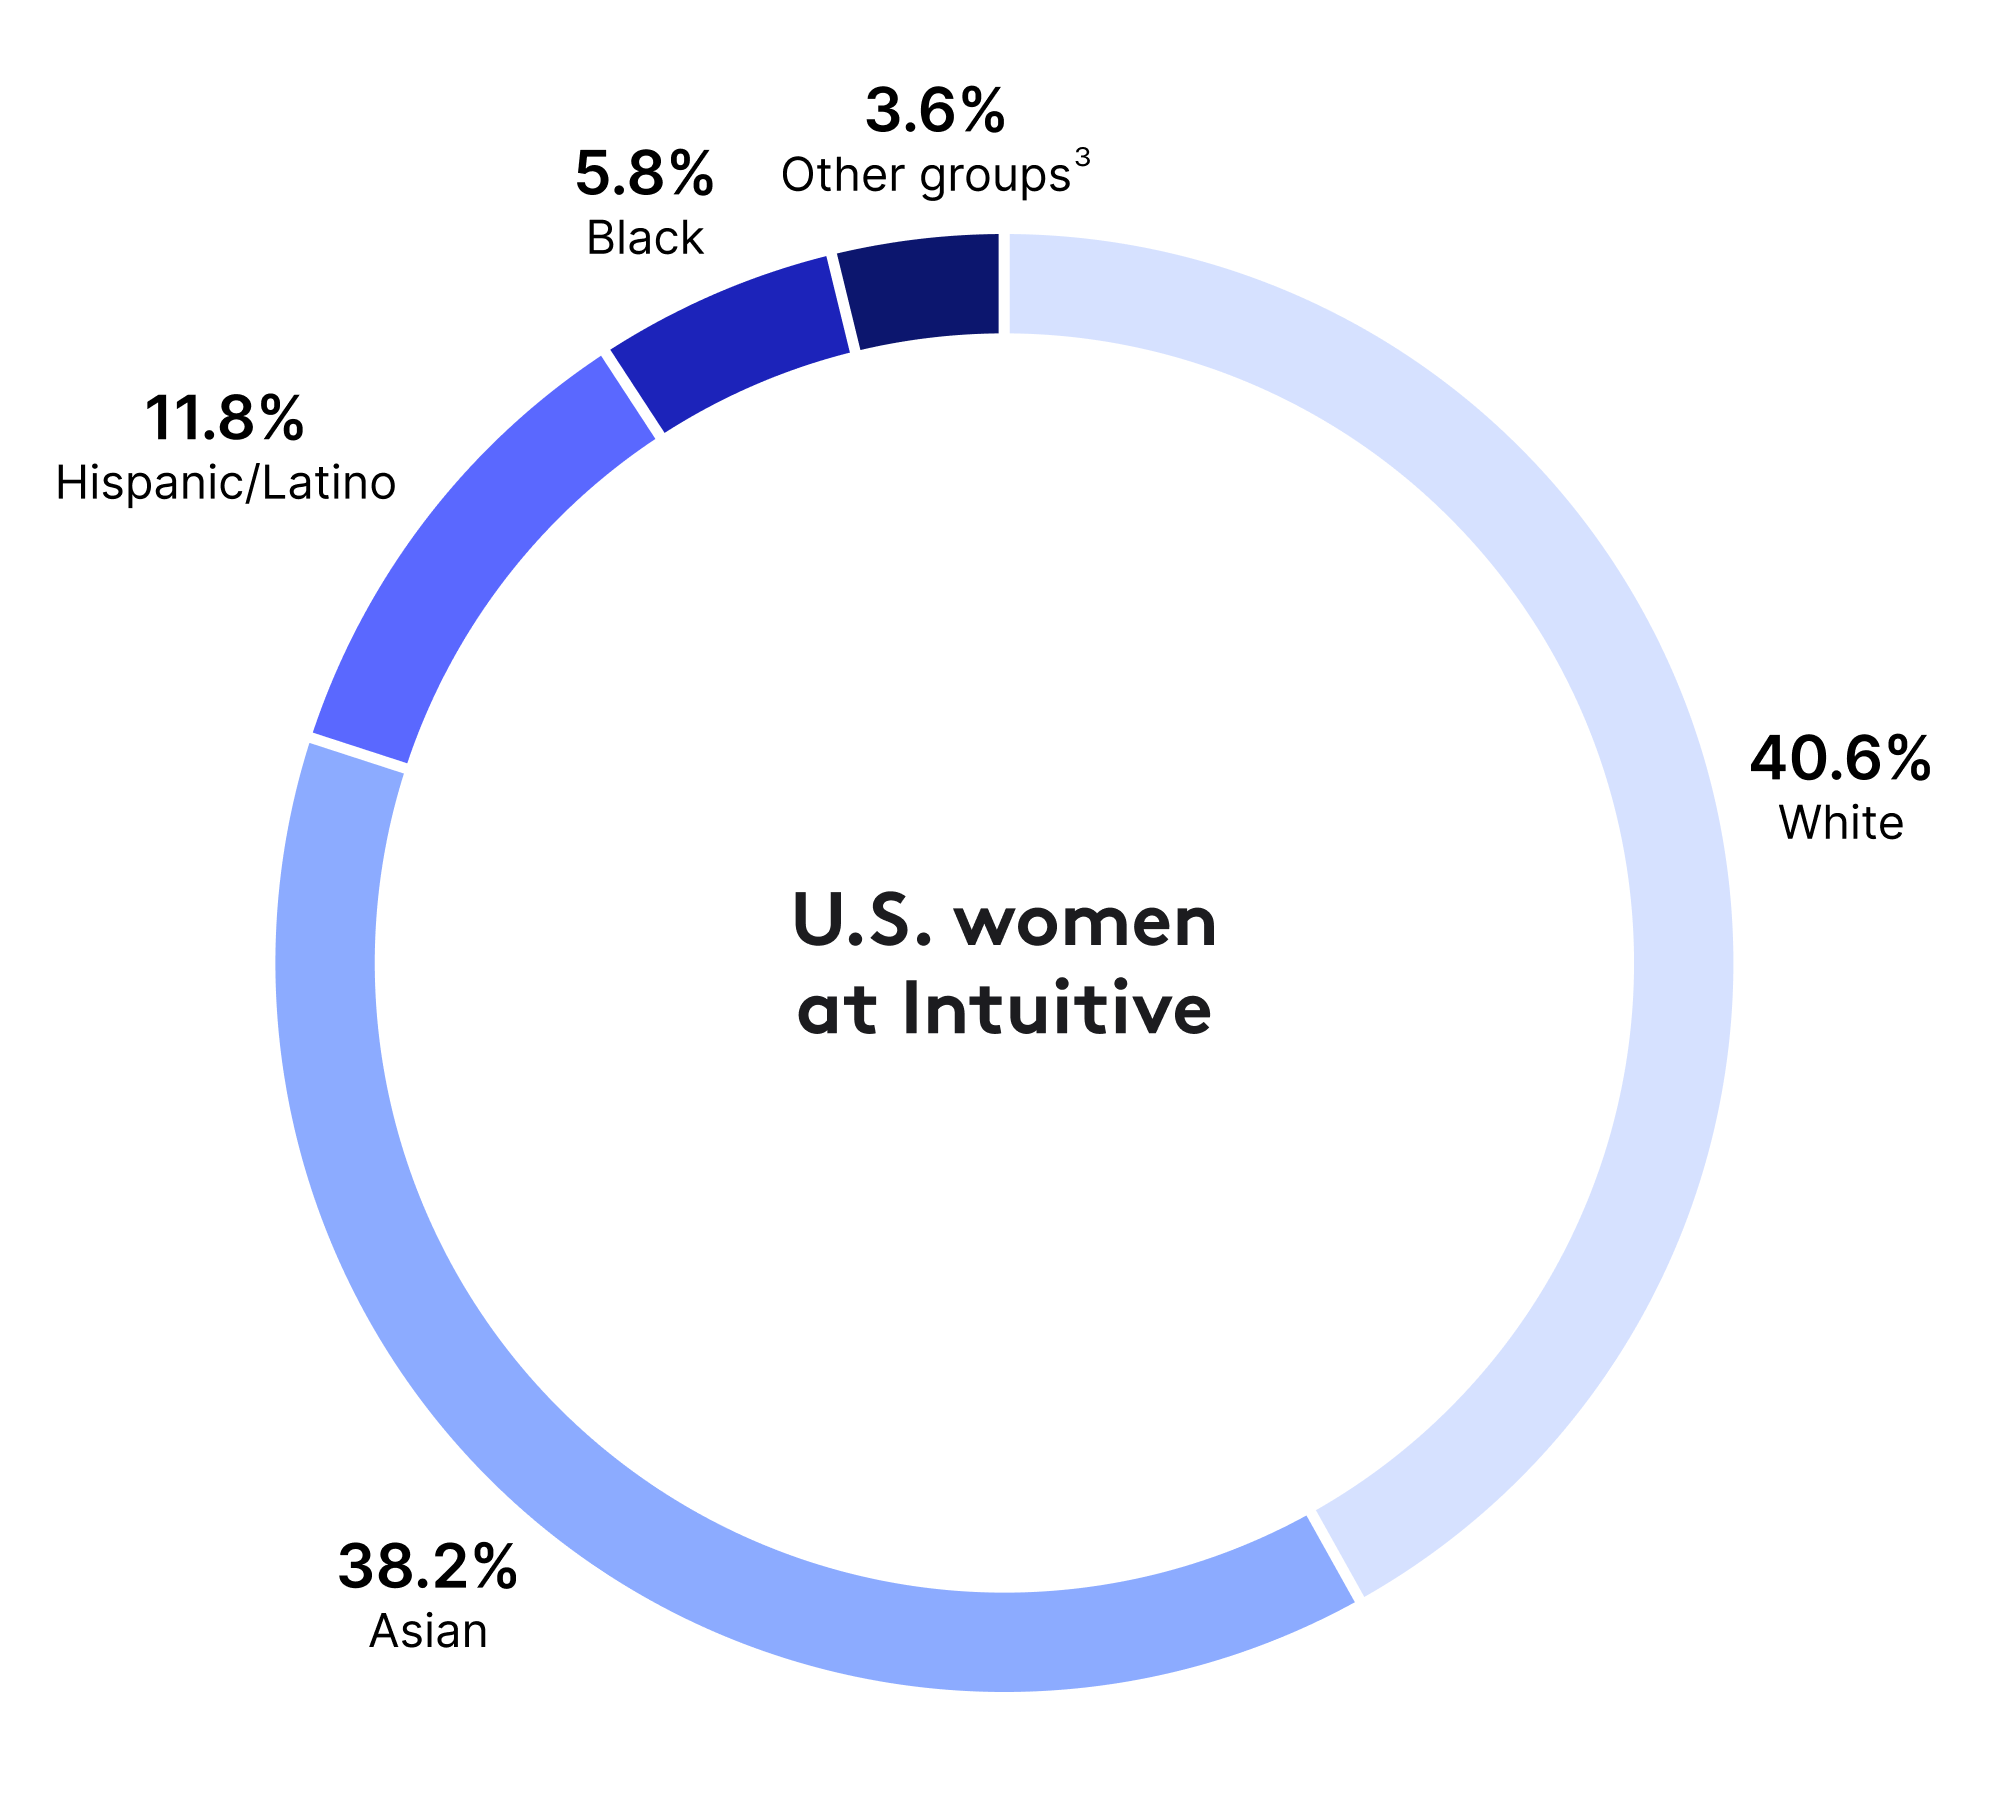 U.S. women representation by race/ethnicity percentages